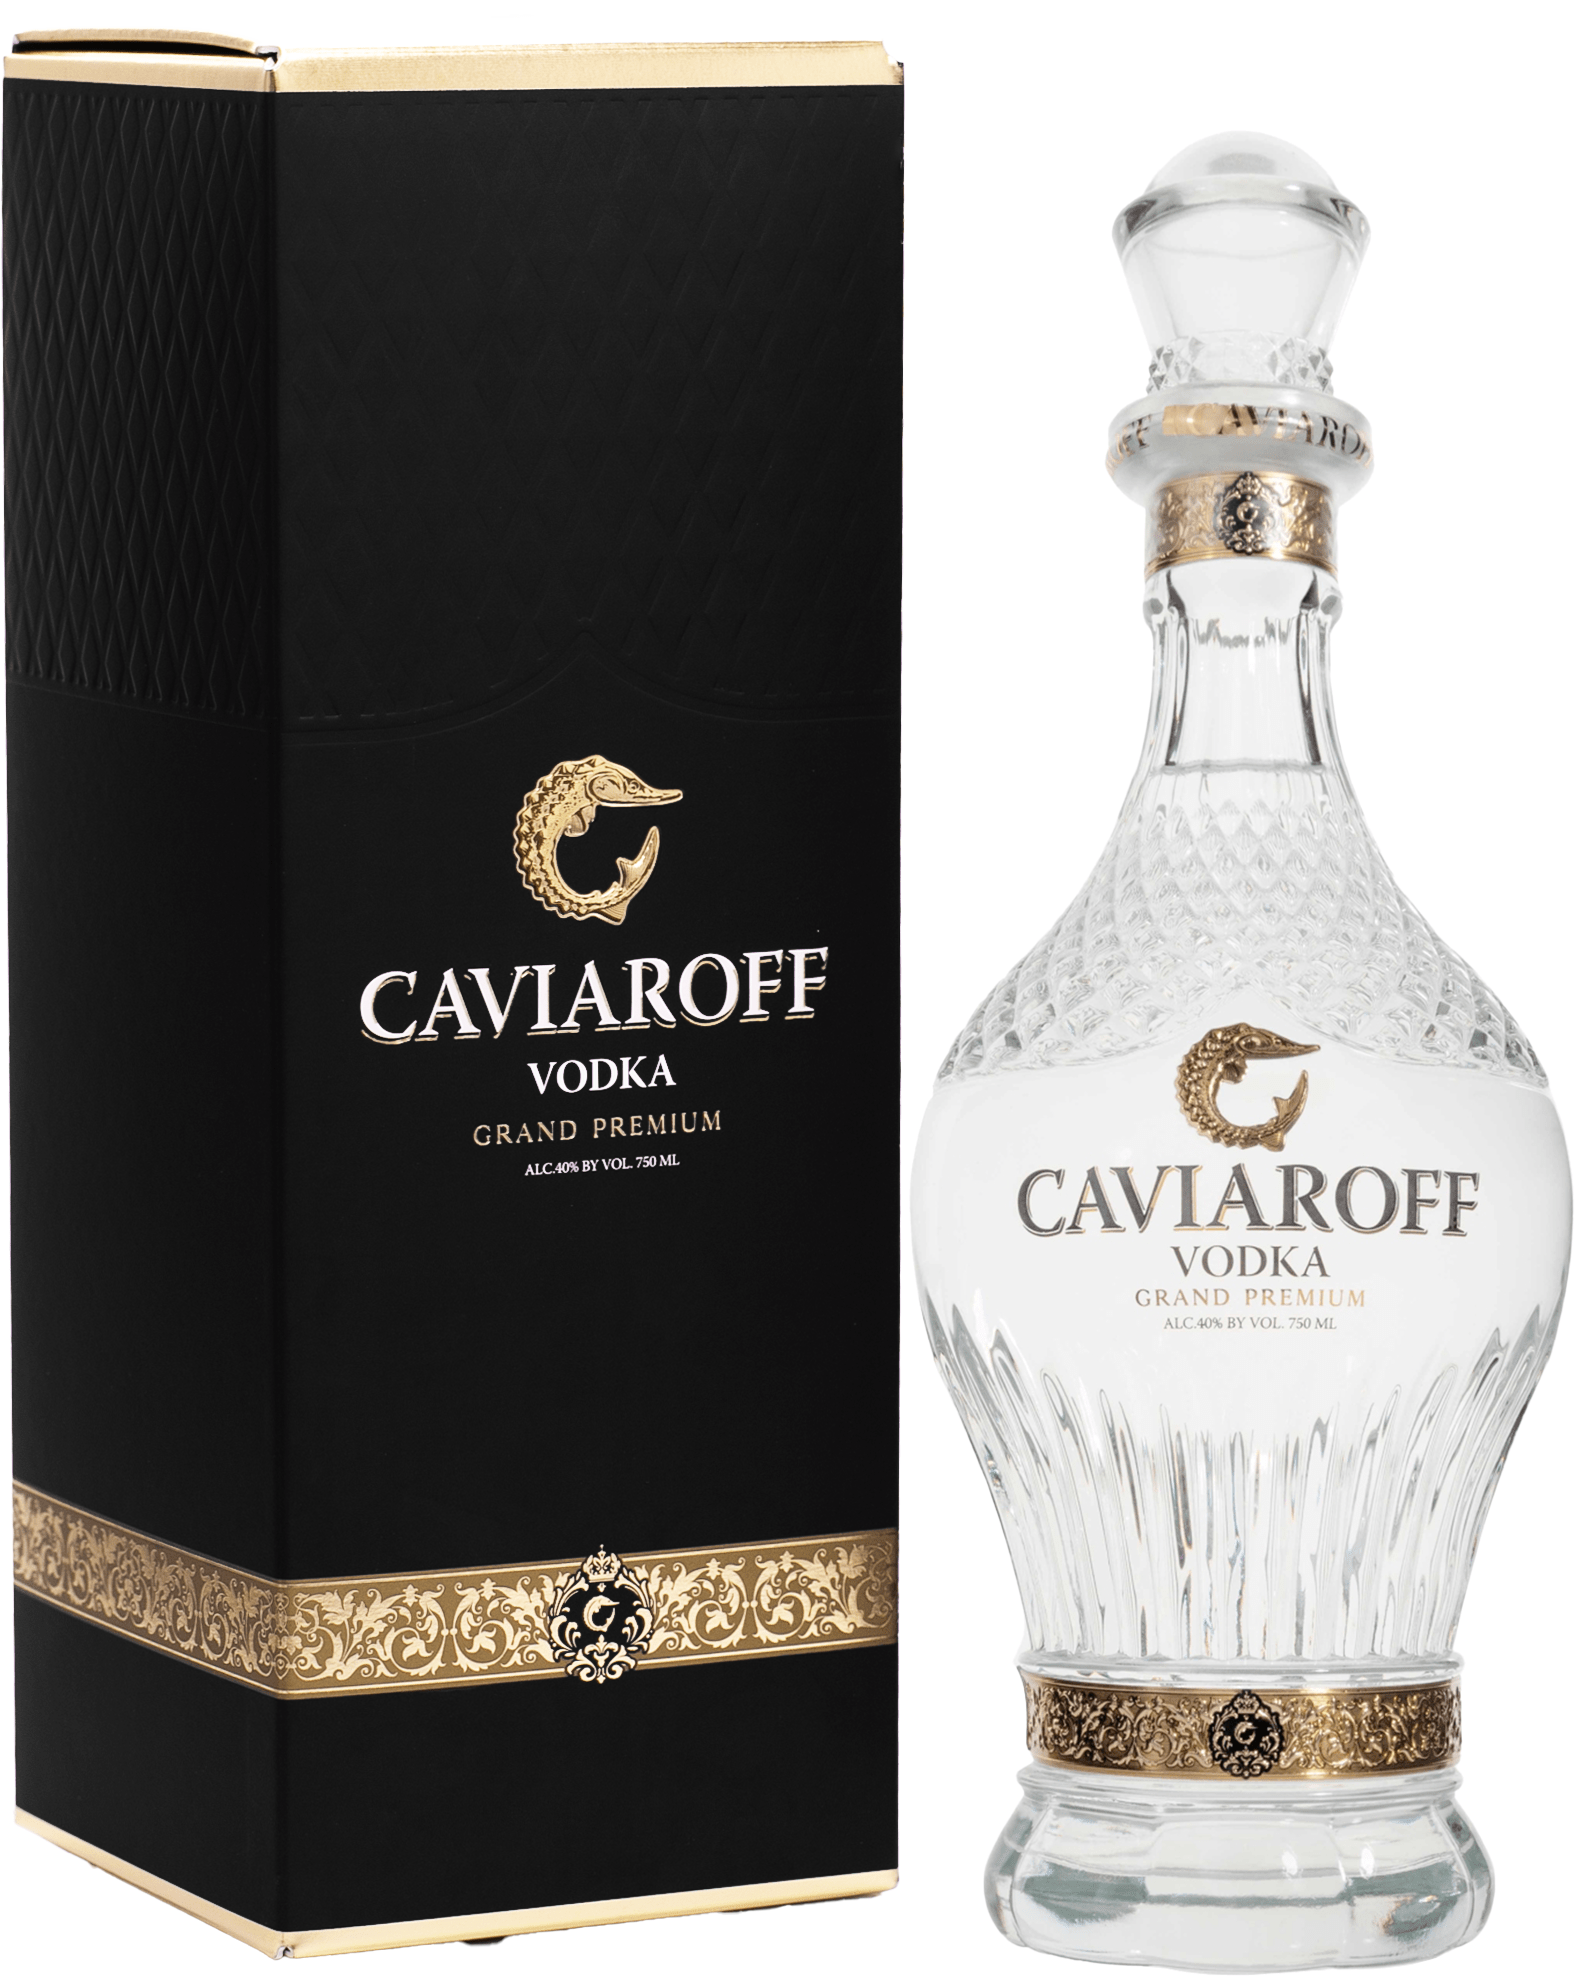 Caviaroff Vodka Grand Premium 40% 0,7l